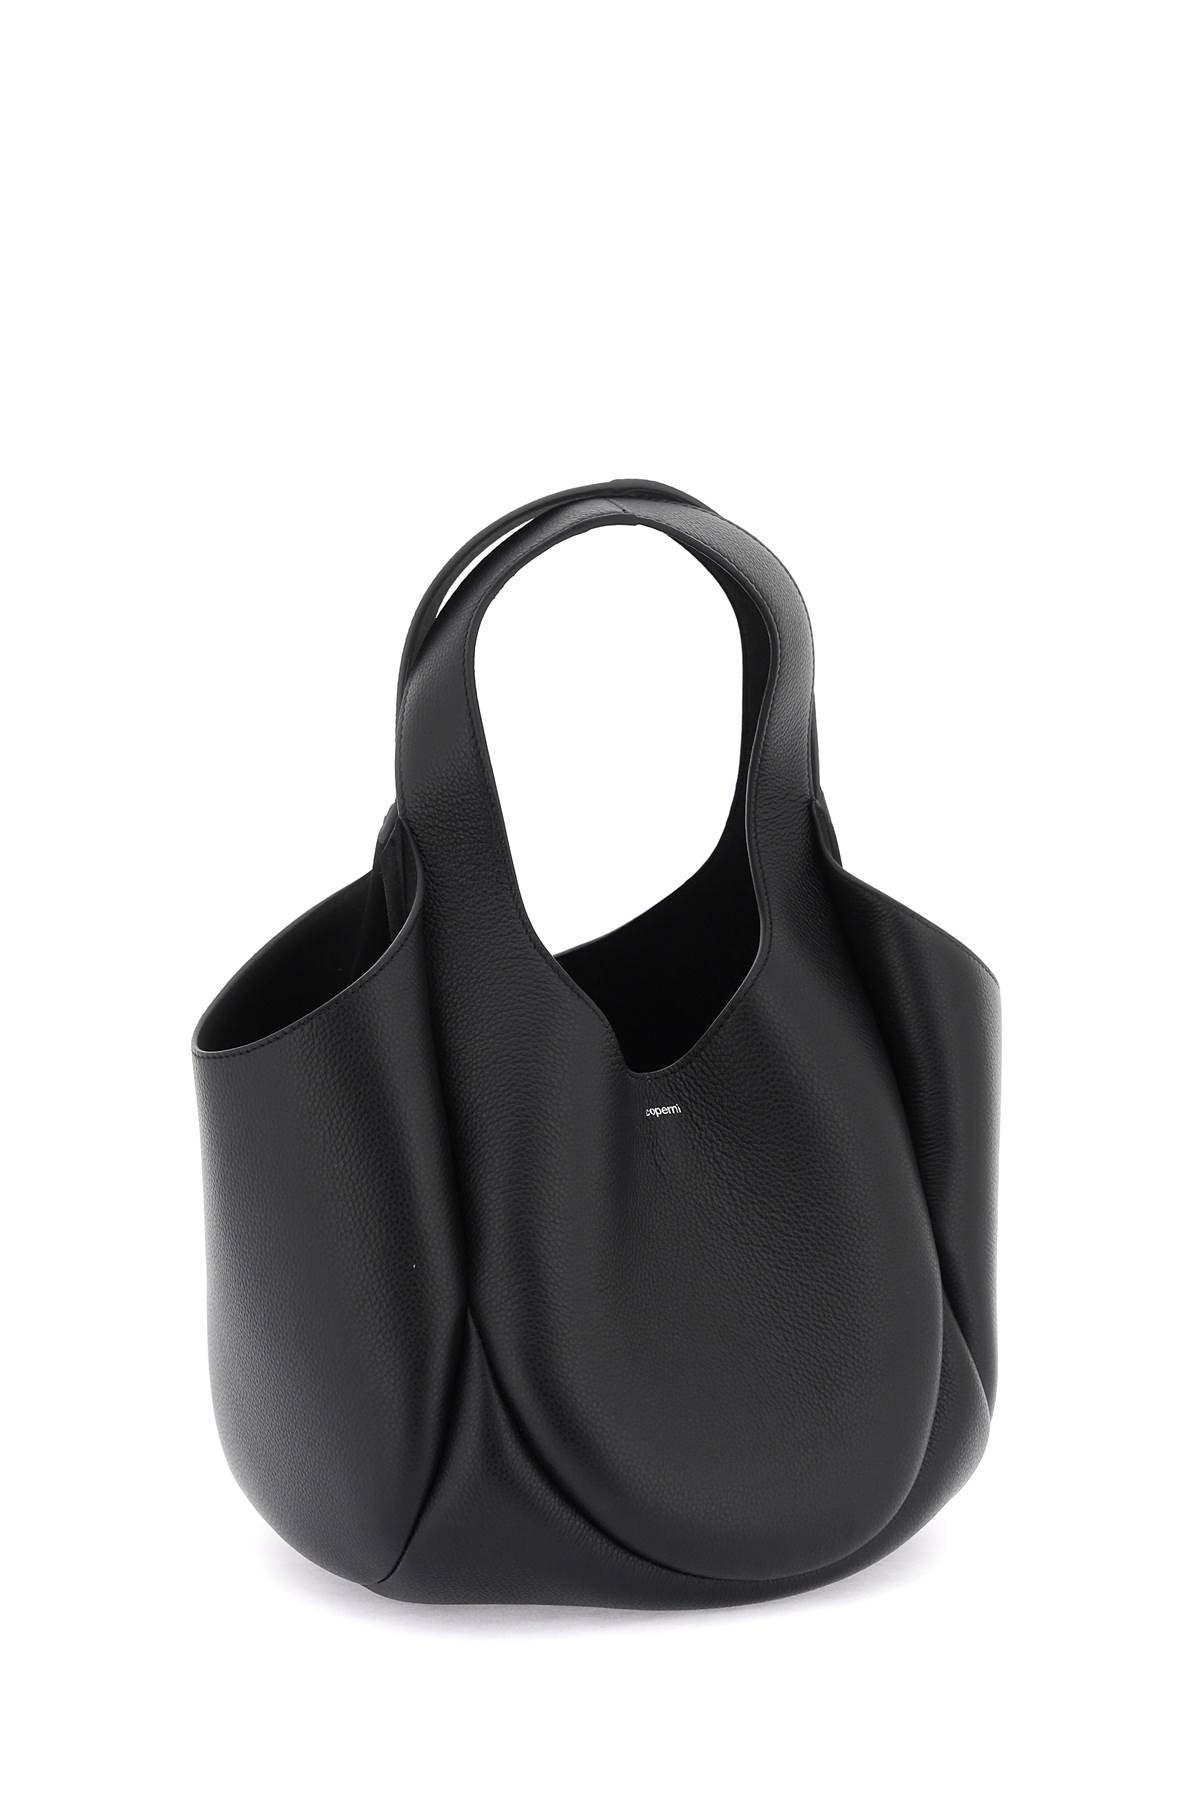 Coperni Leather Bucket Bag-Coperni-os-Urbanheer